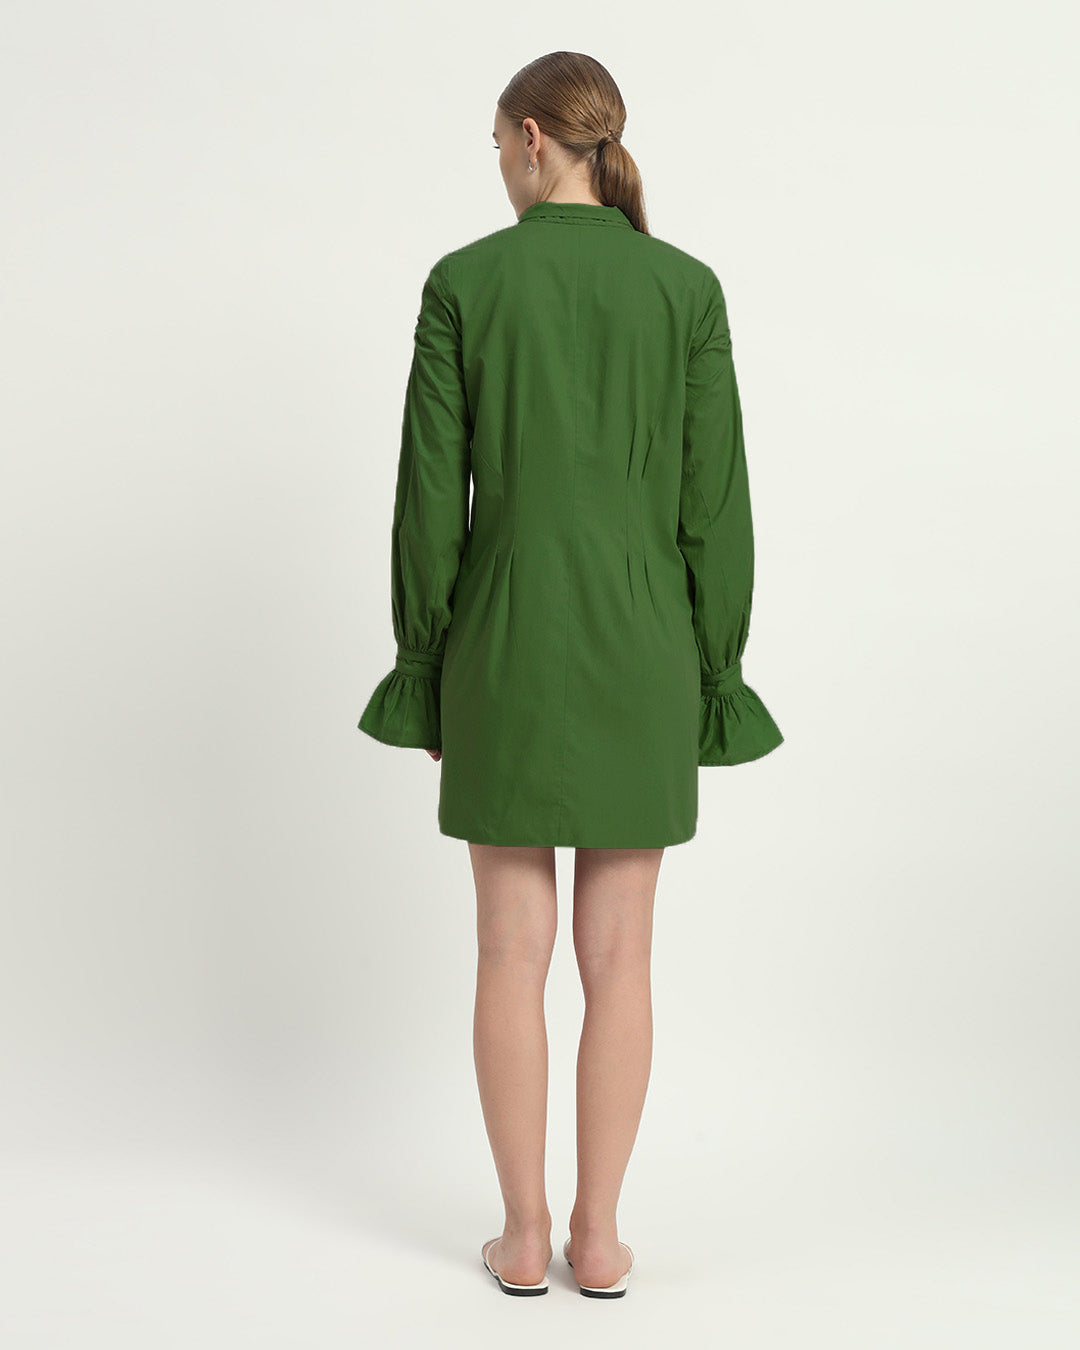 The Emerald Sedona Cotton Dress